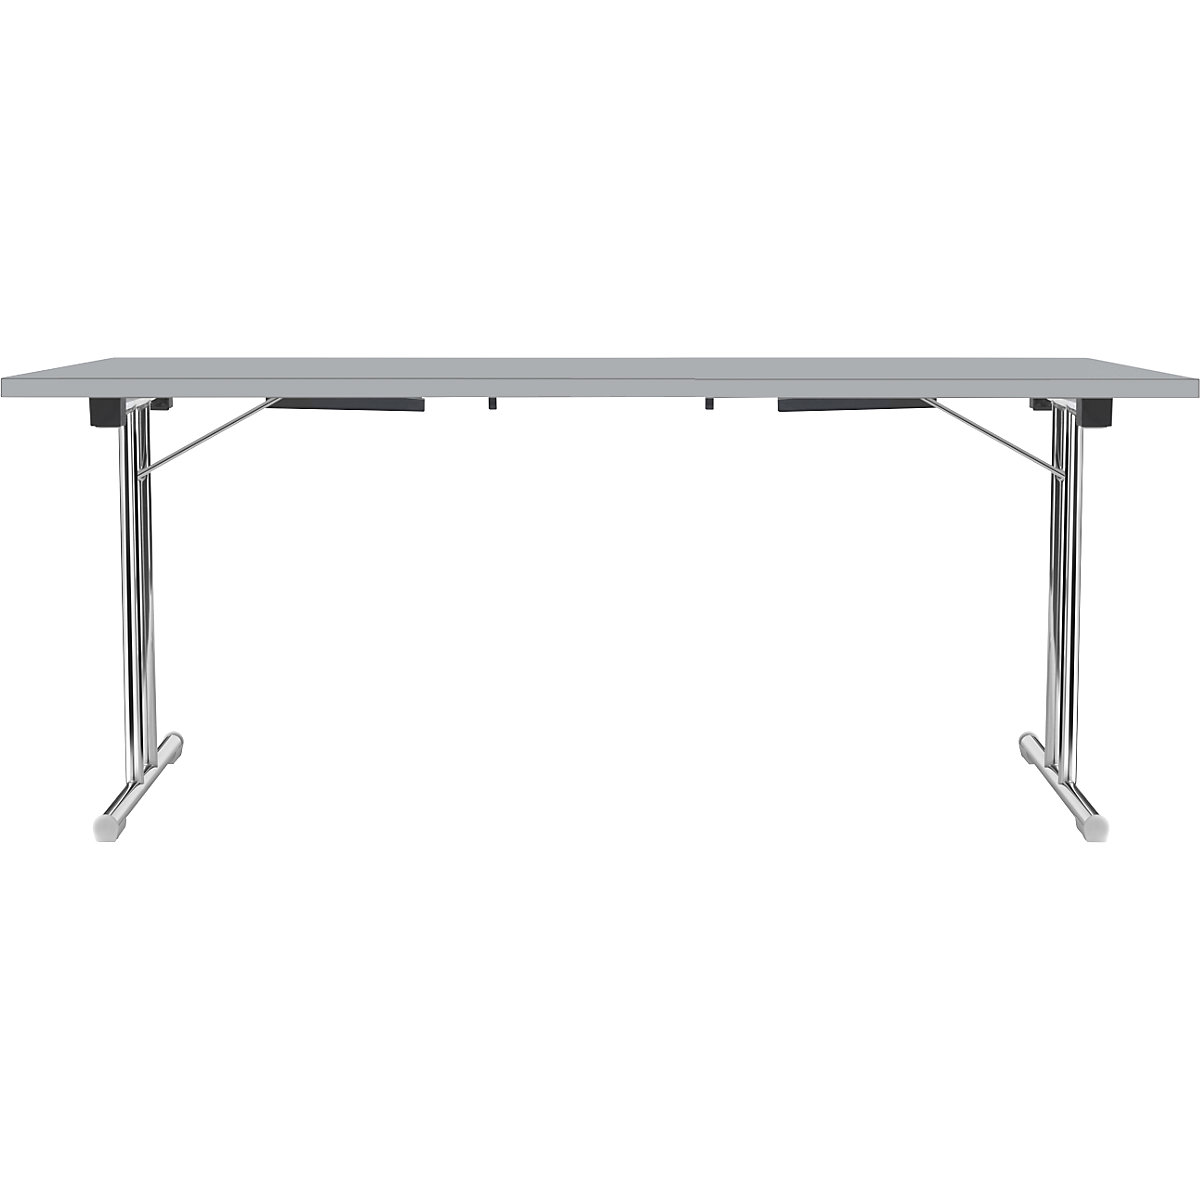 Folding table with double T base, tubular steel frame, chrome plated, light grey/light grey, WxD 1800 x 800 mm-18